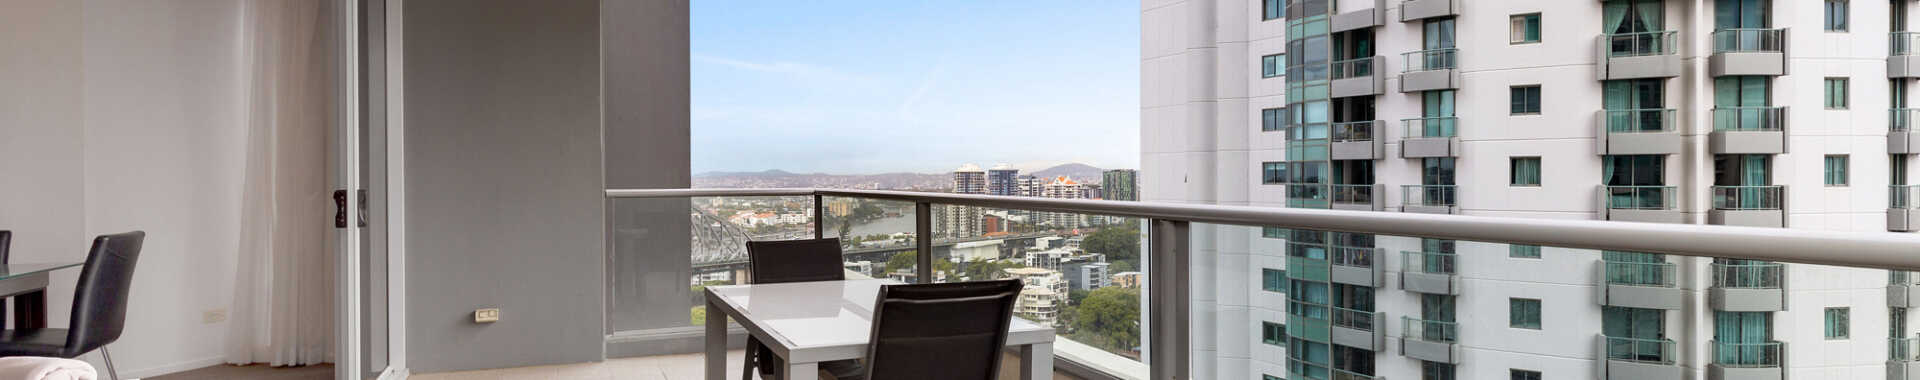 Brisbane Corporate Apartment Macrossan St balcony